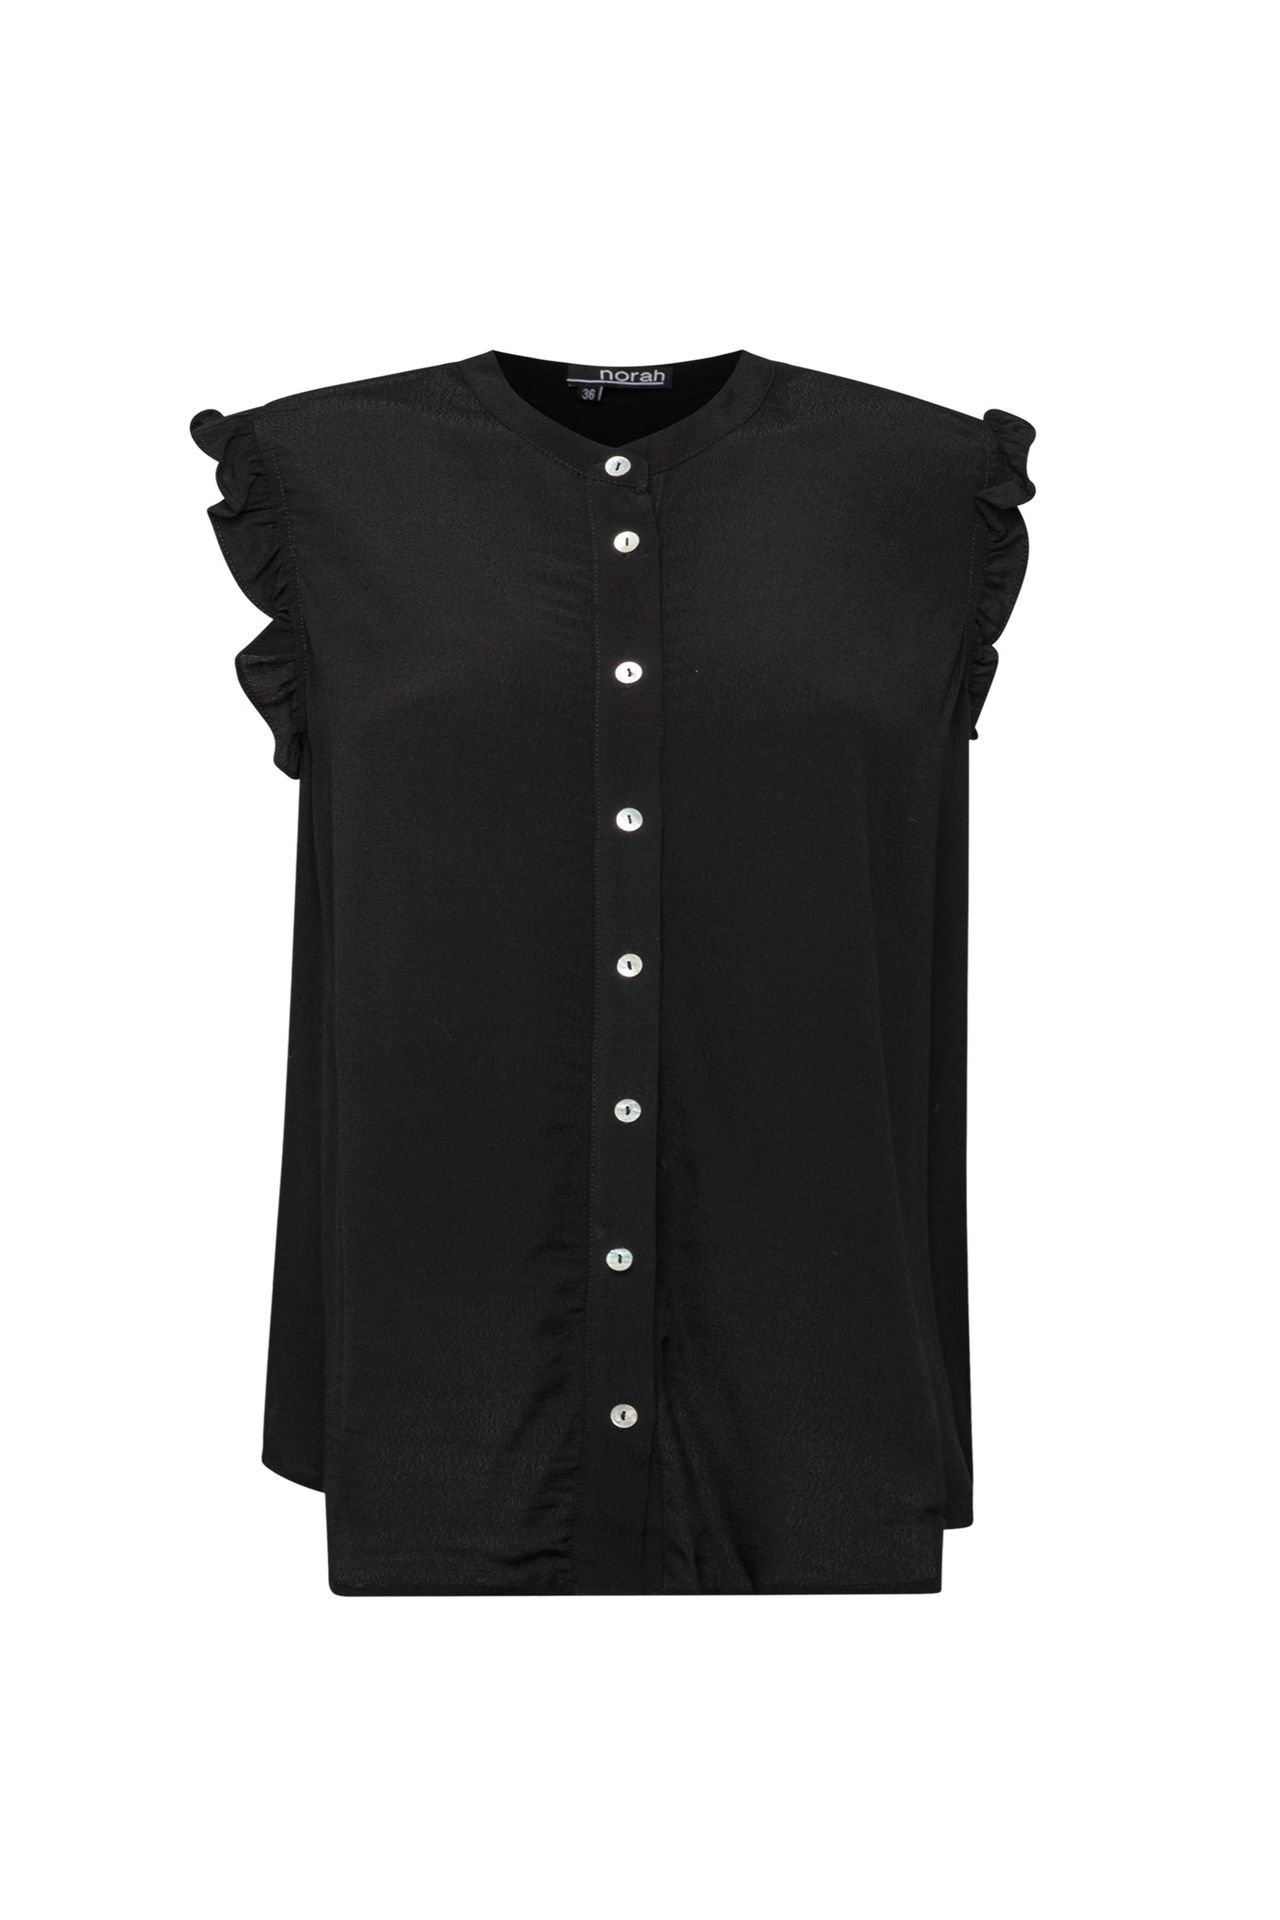 Norah Zwarte blouse black 213782-001